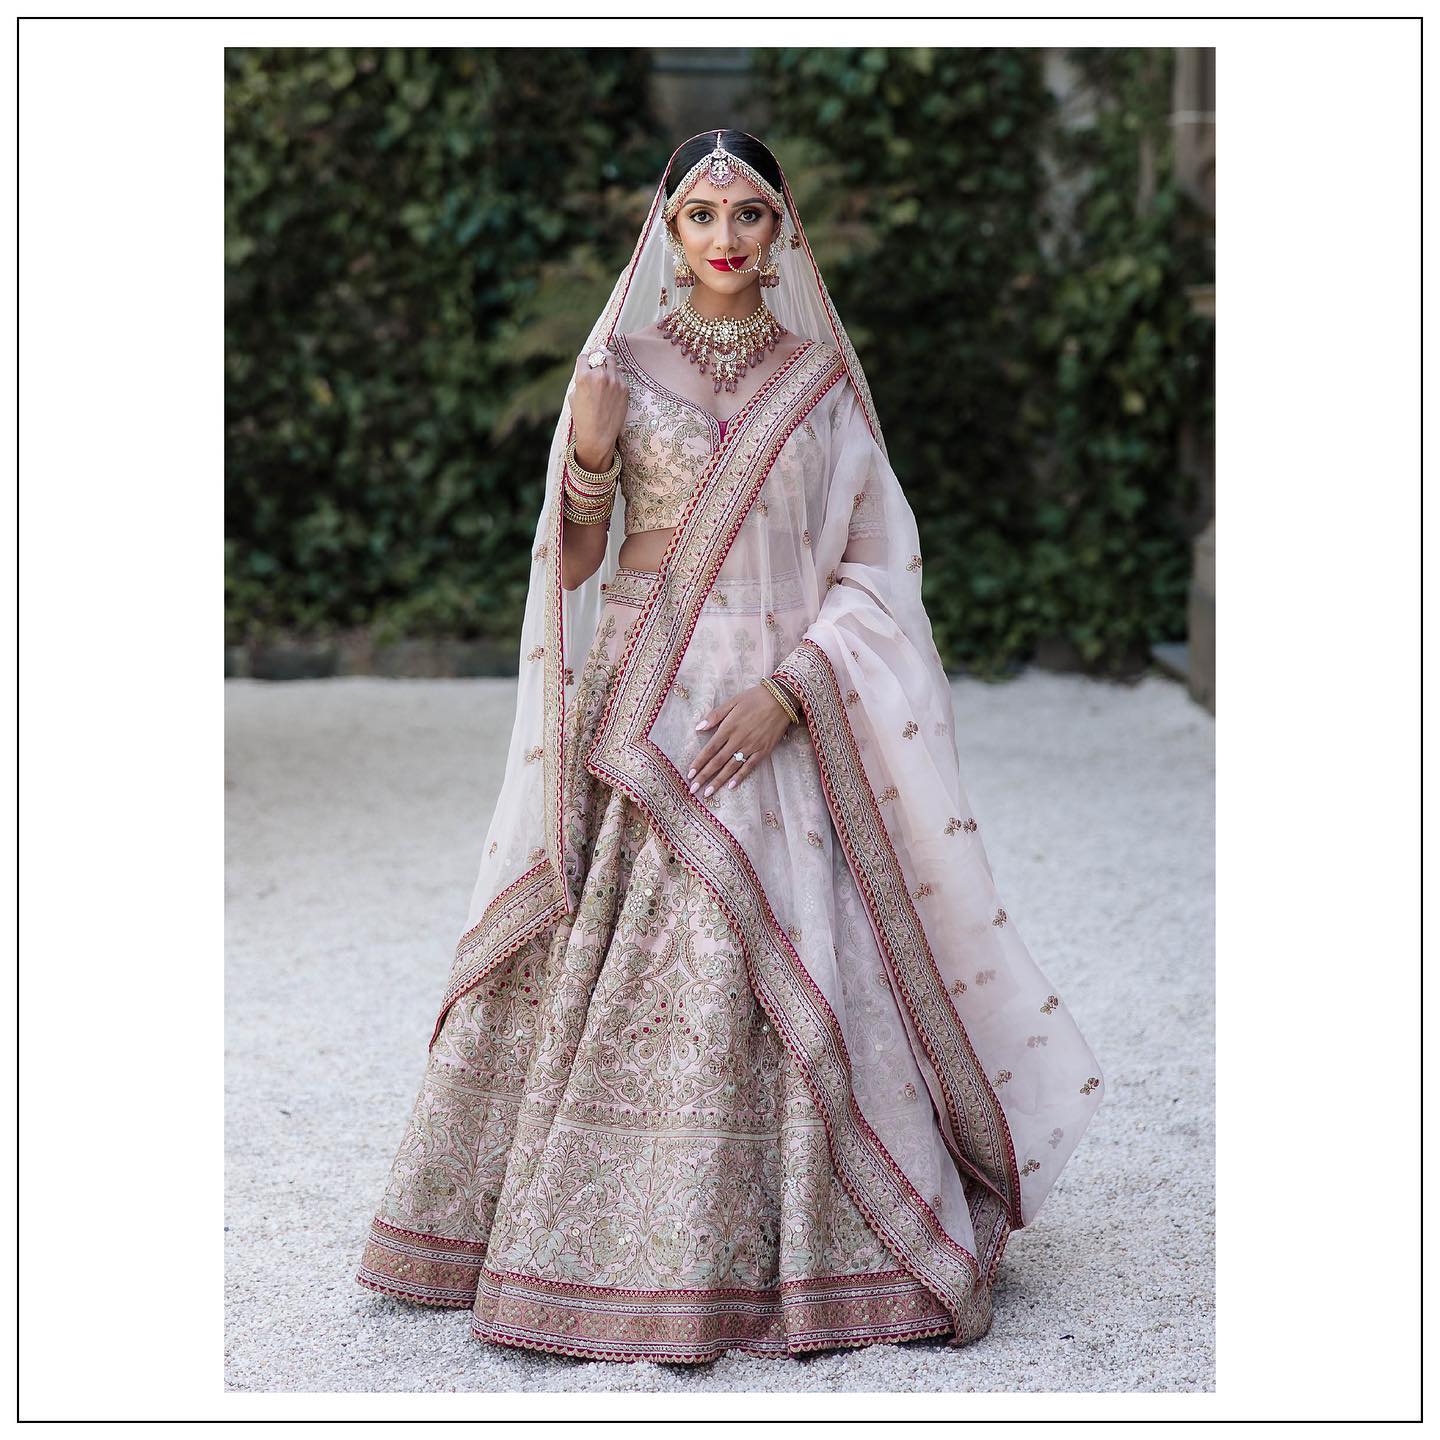 Katrina Kaif wore a stunning multi-coloured Sabyasachi lehenga for her  mehandi with Vicky Kaushal | Vogue India | Wedding Wardrobe